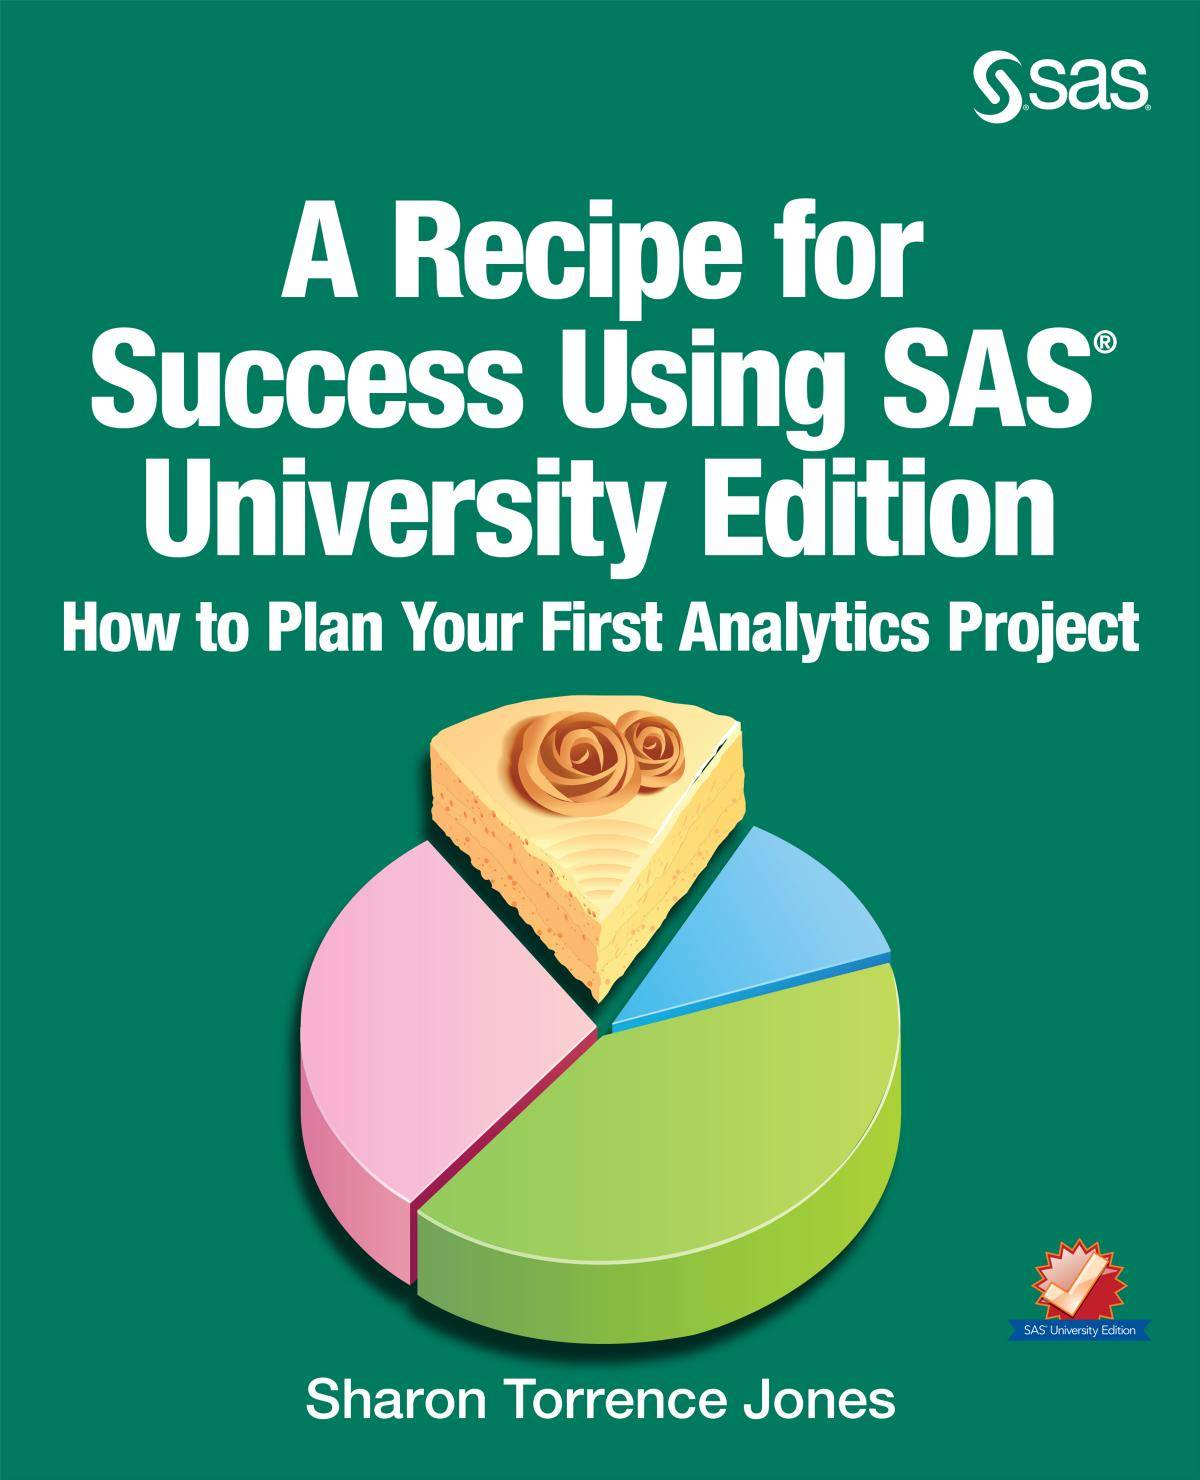 Sas user guide pdf